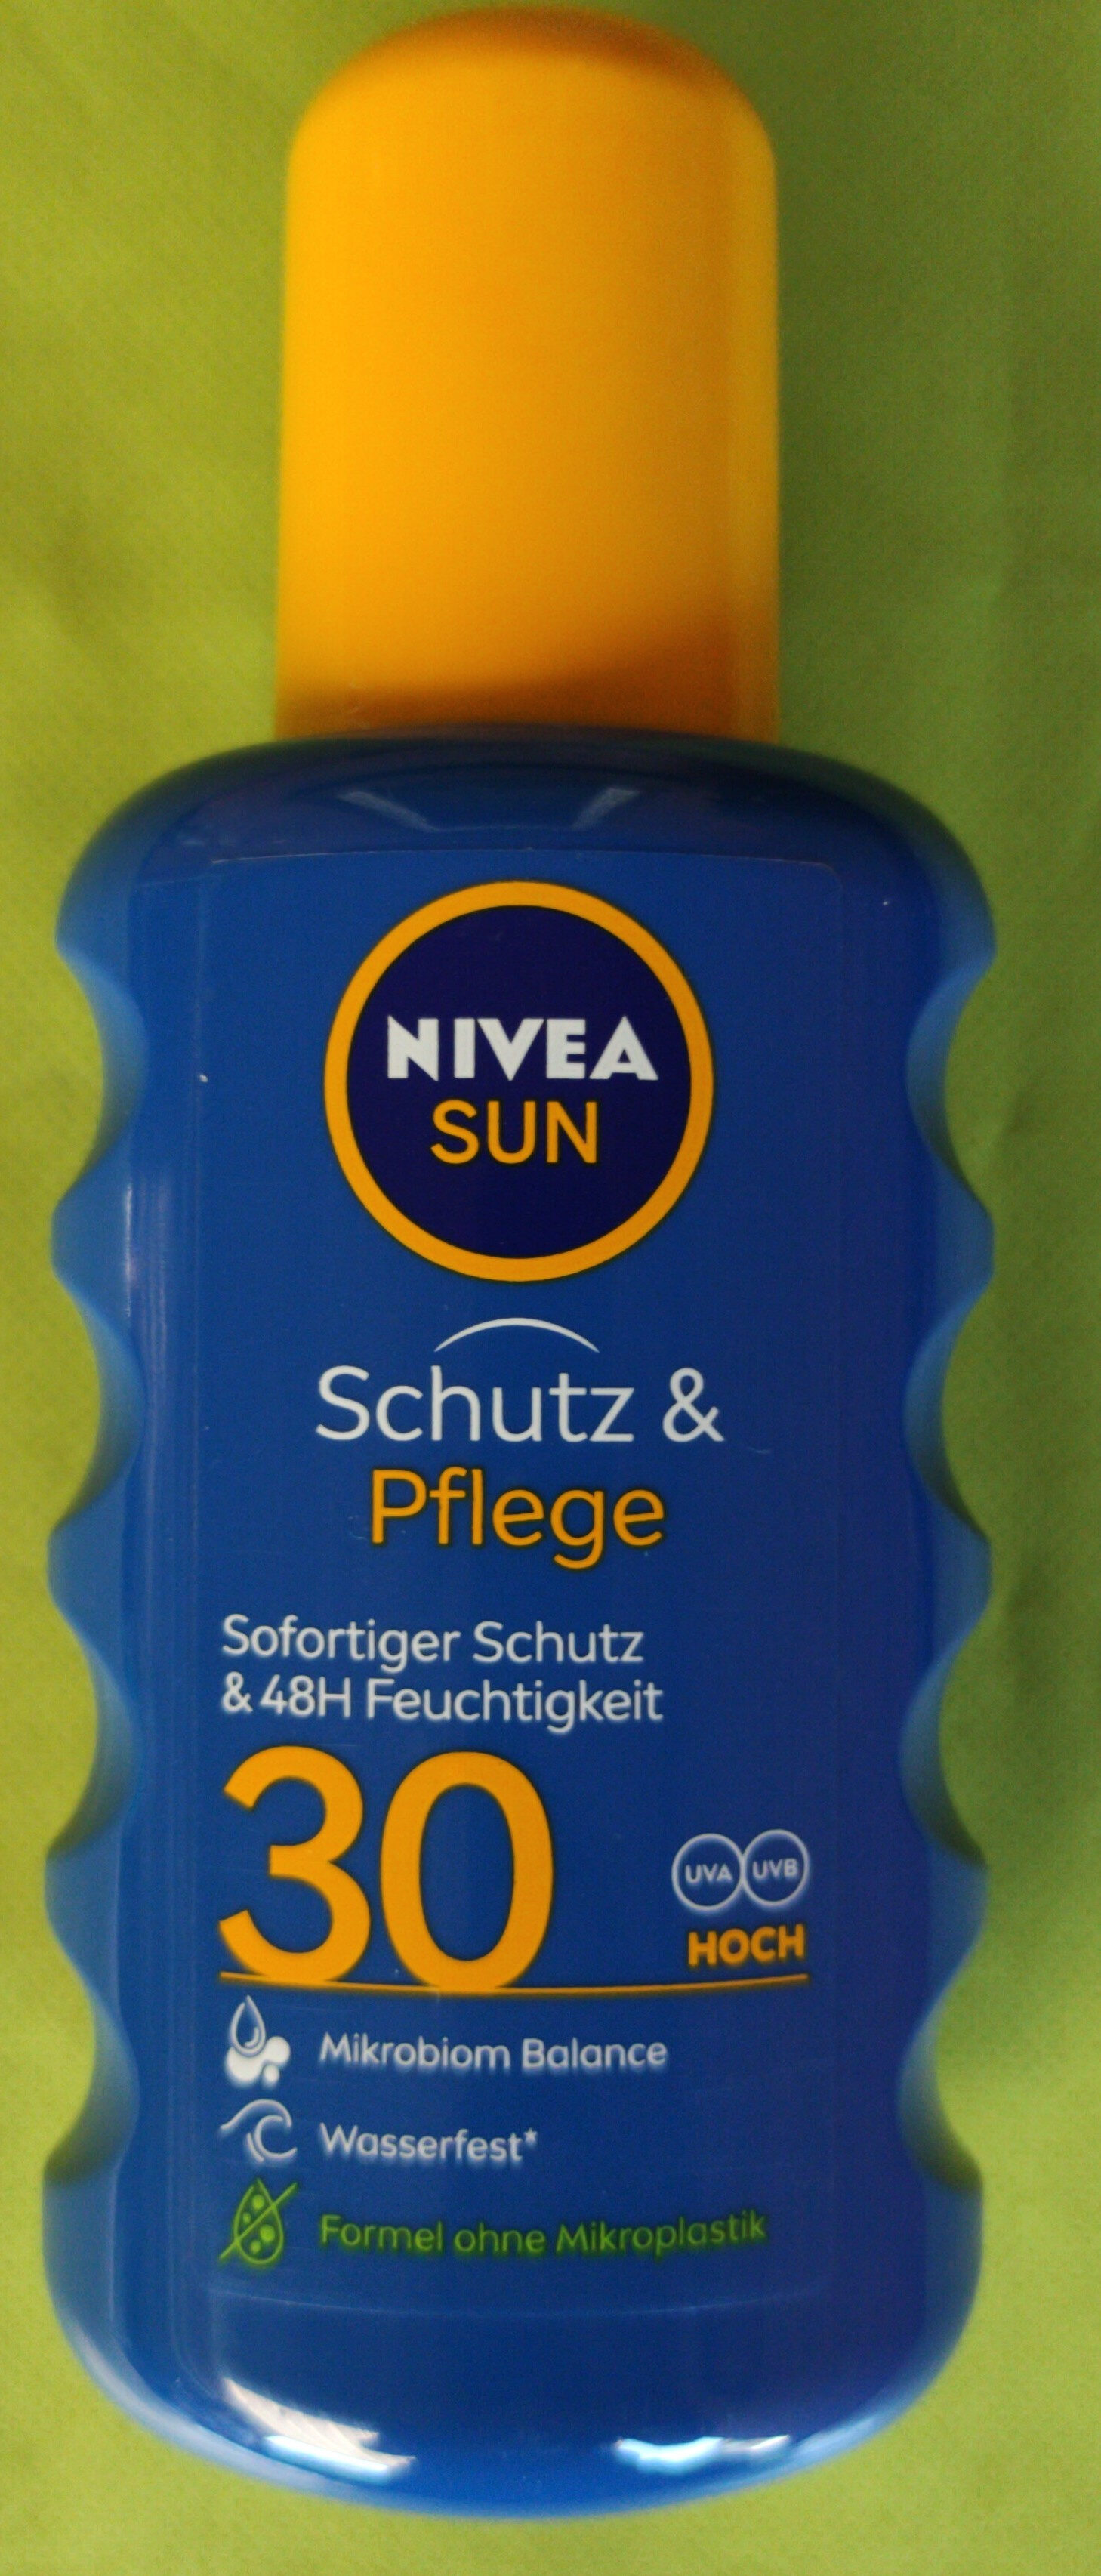 Schutz & Pflege Sonnenspray 30 - Produkt - de